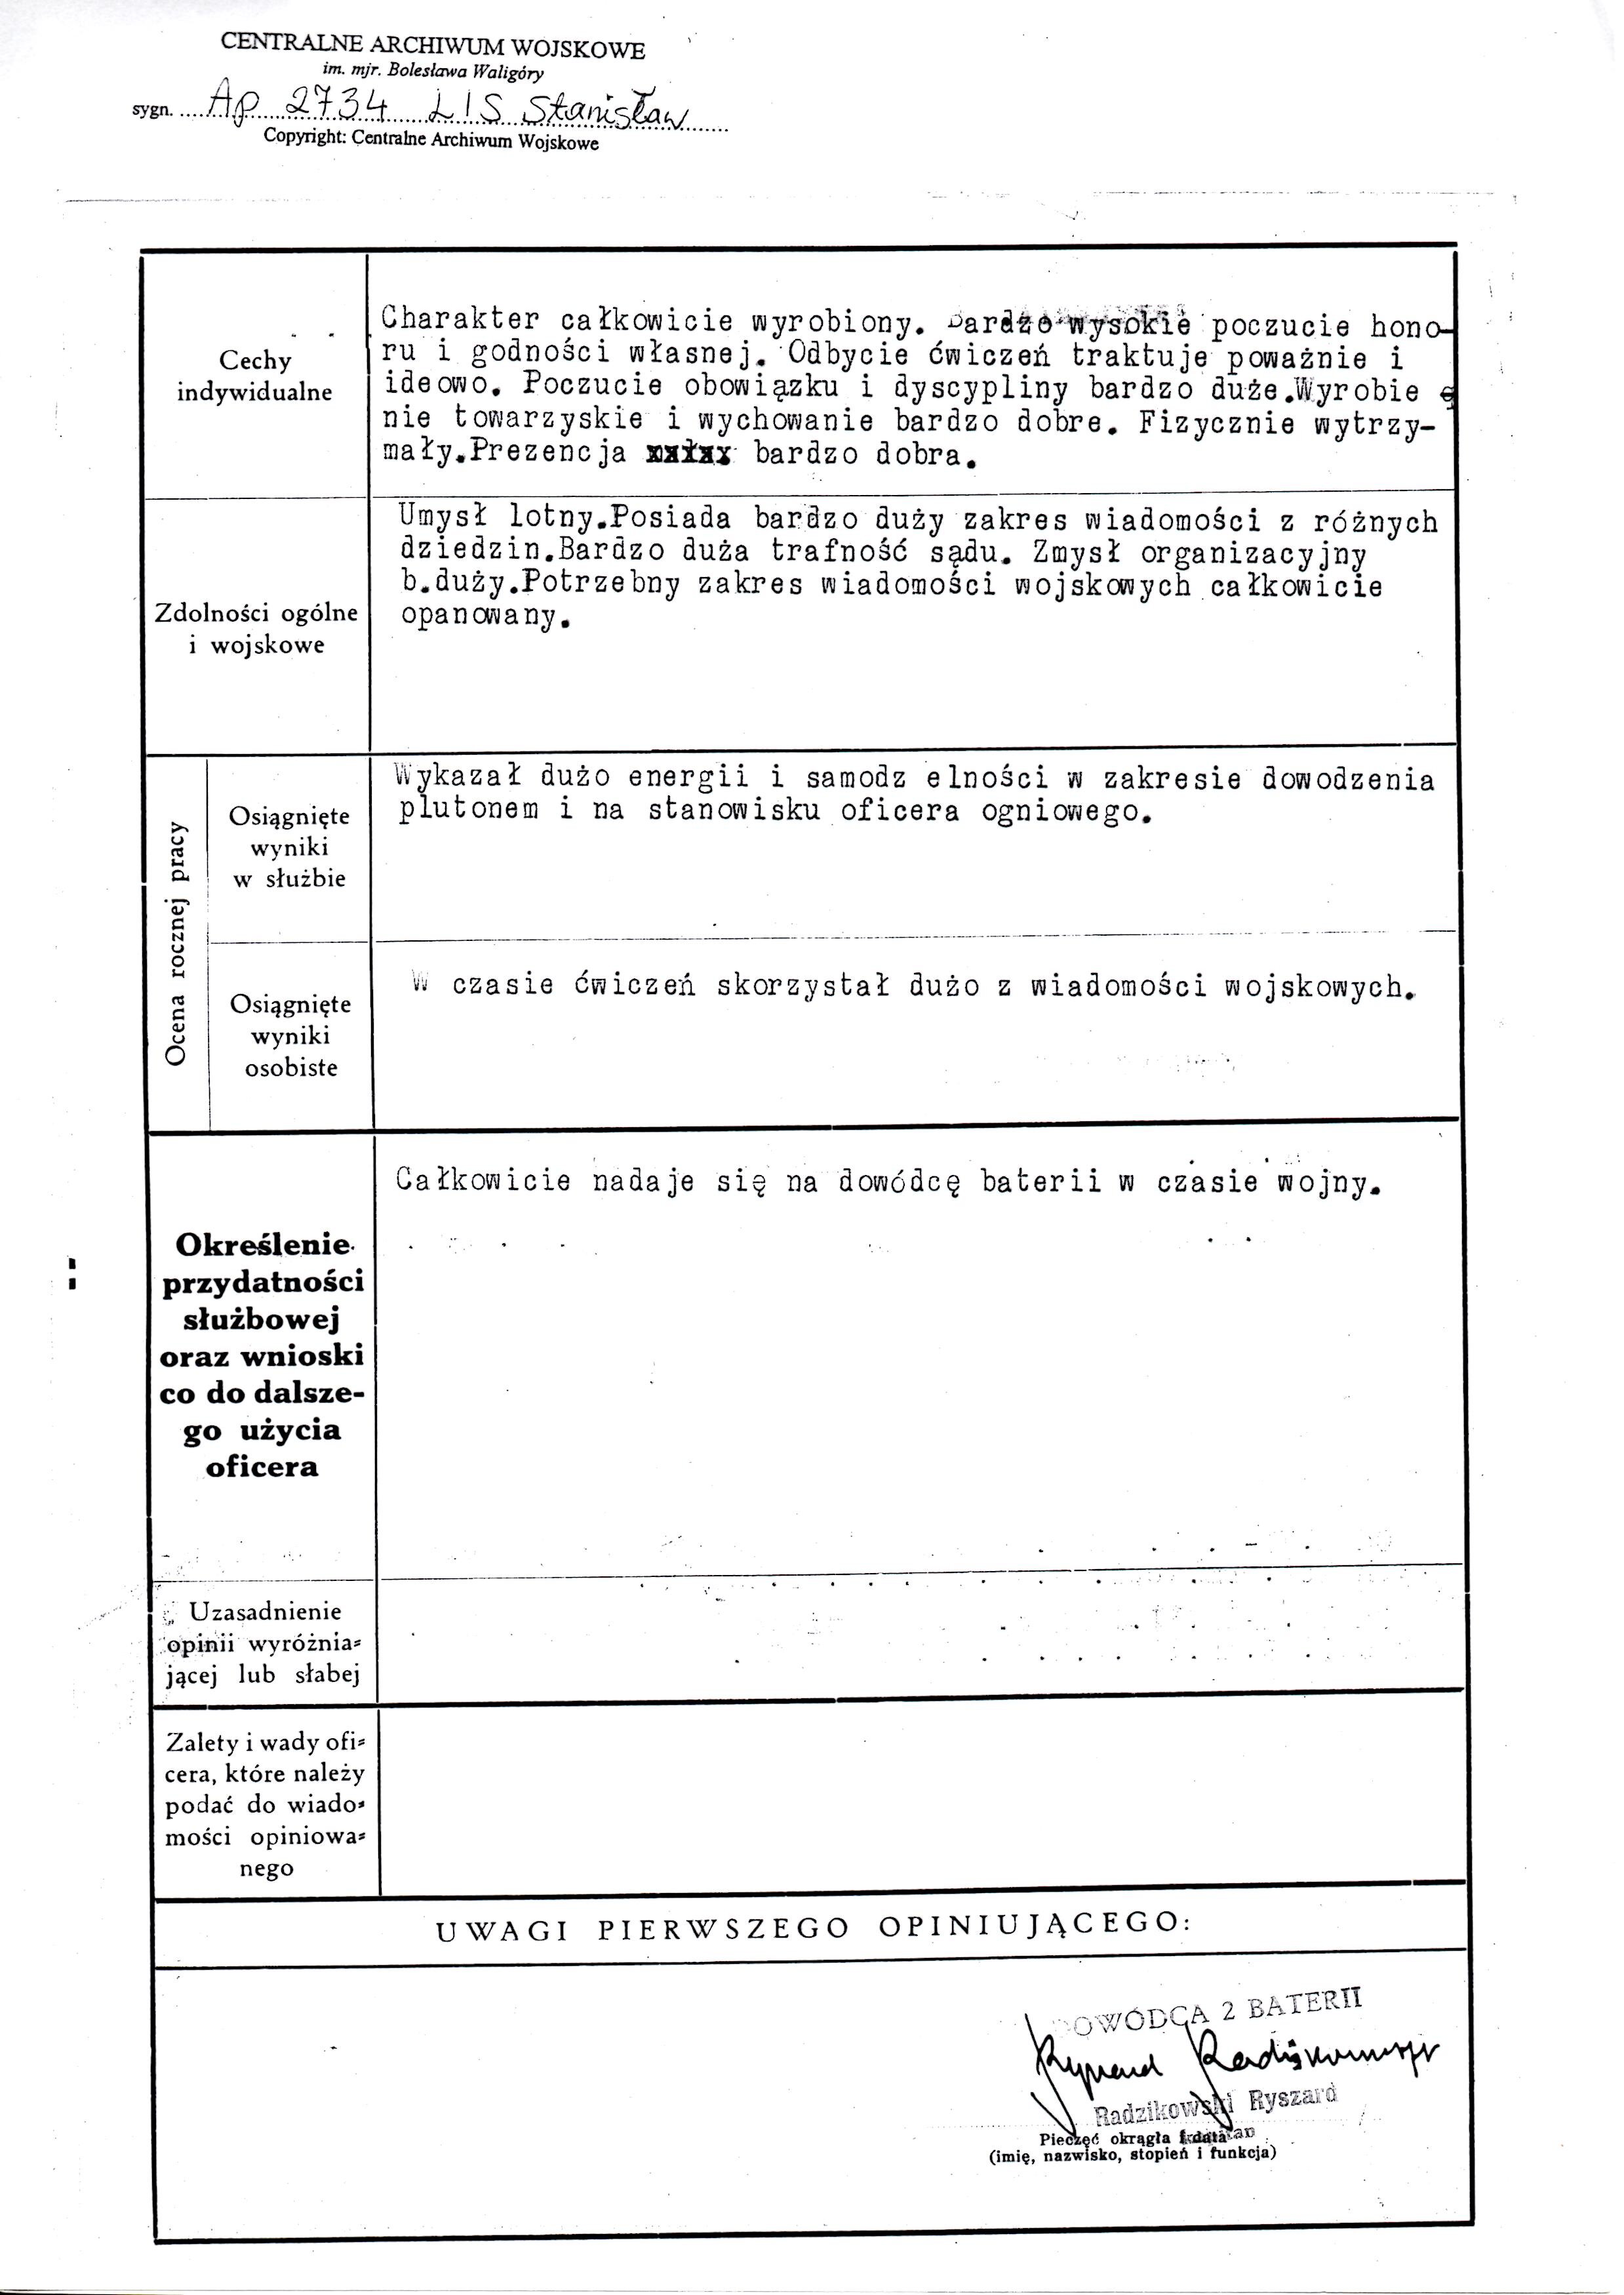 Stanislaw Lis Annual List of Qualifications 1938 Page 2.jpg